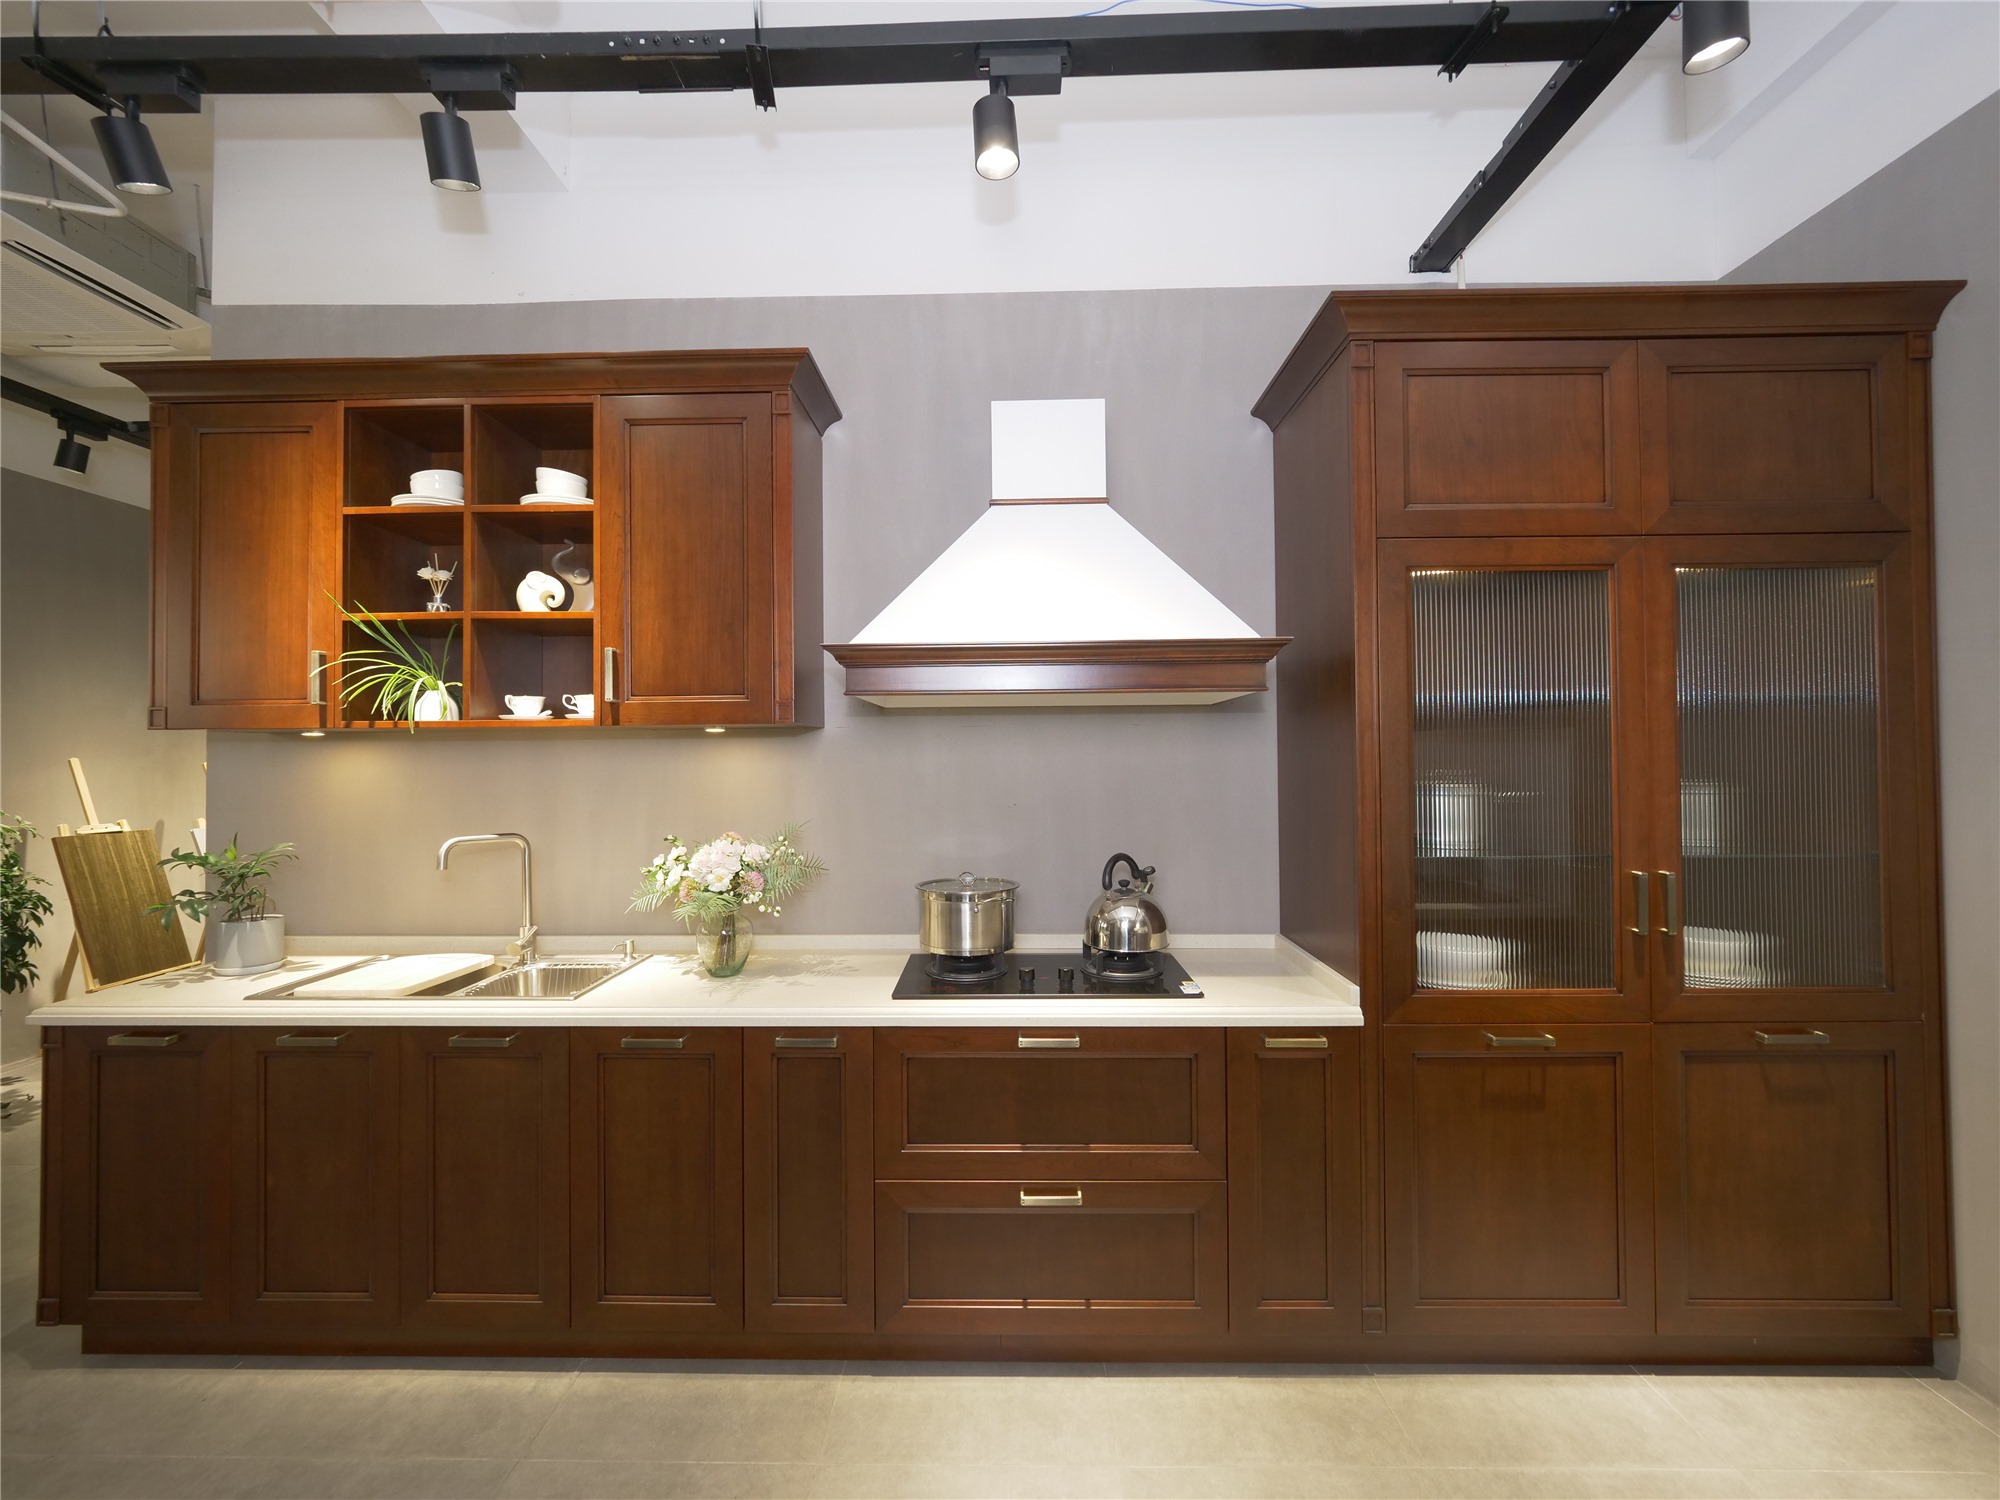 AisDecor custom wooden kitchen cupboards manufacturer-2